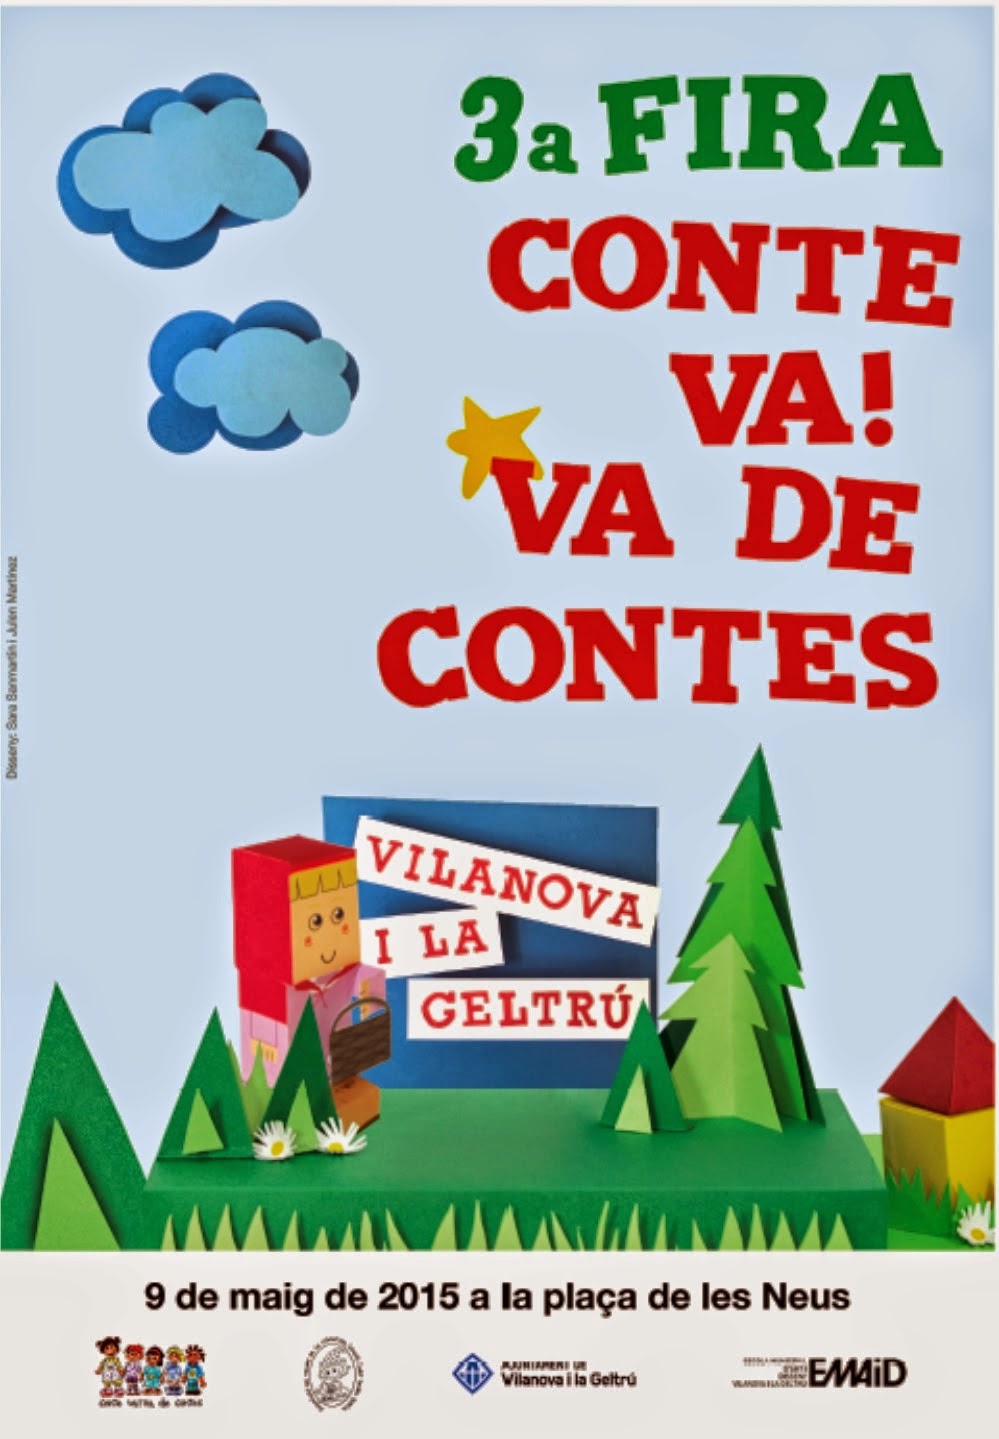 http://contevavadecontes.blogspot.com.es/2015/04/conte-va-va-de-contes-el-programa-de-la.html